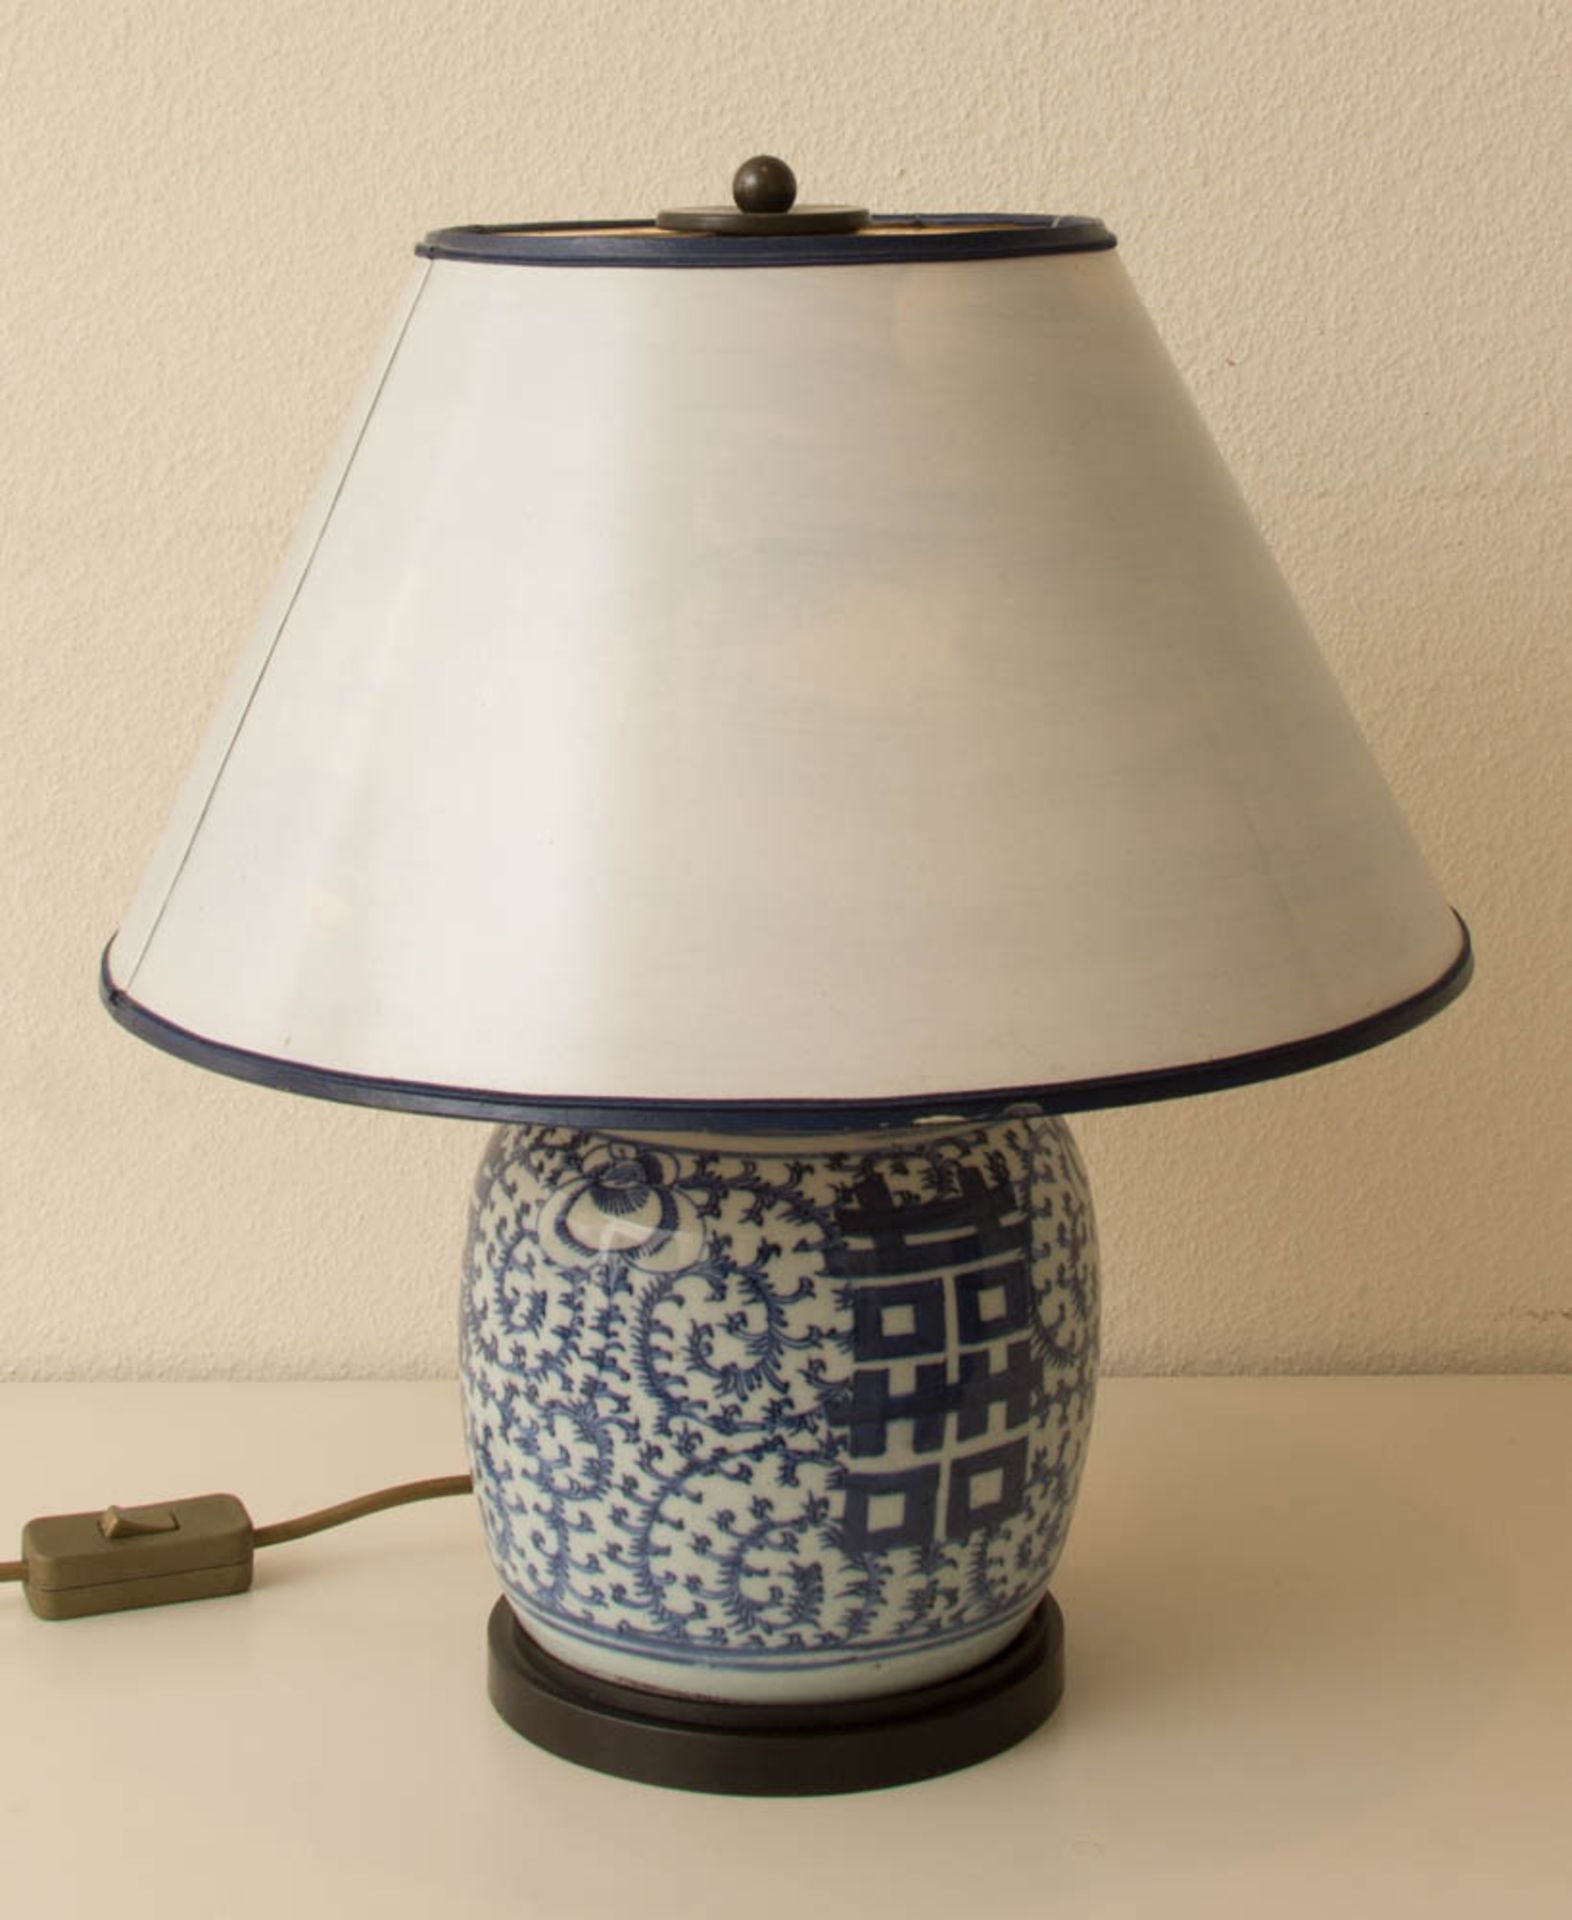 Chinesische Porzellan Lampe. - Image 3 of 3